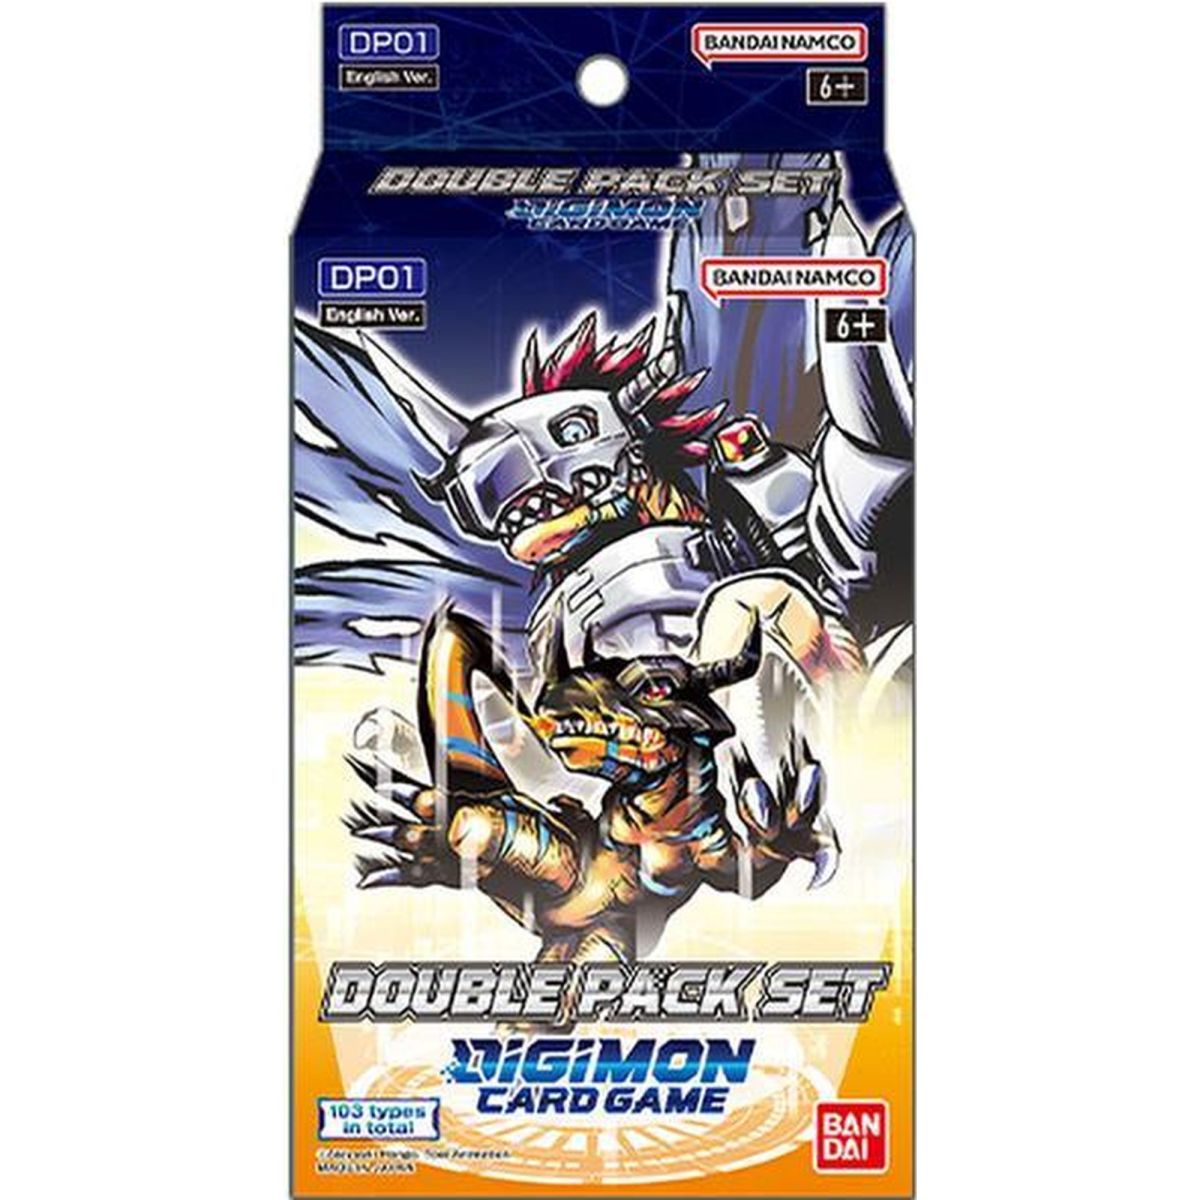 Digimon-Kartenspiel – Box – Doppelpack-Set – DP01 Band 1 – DE